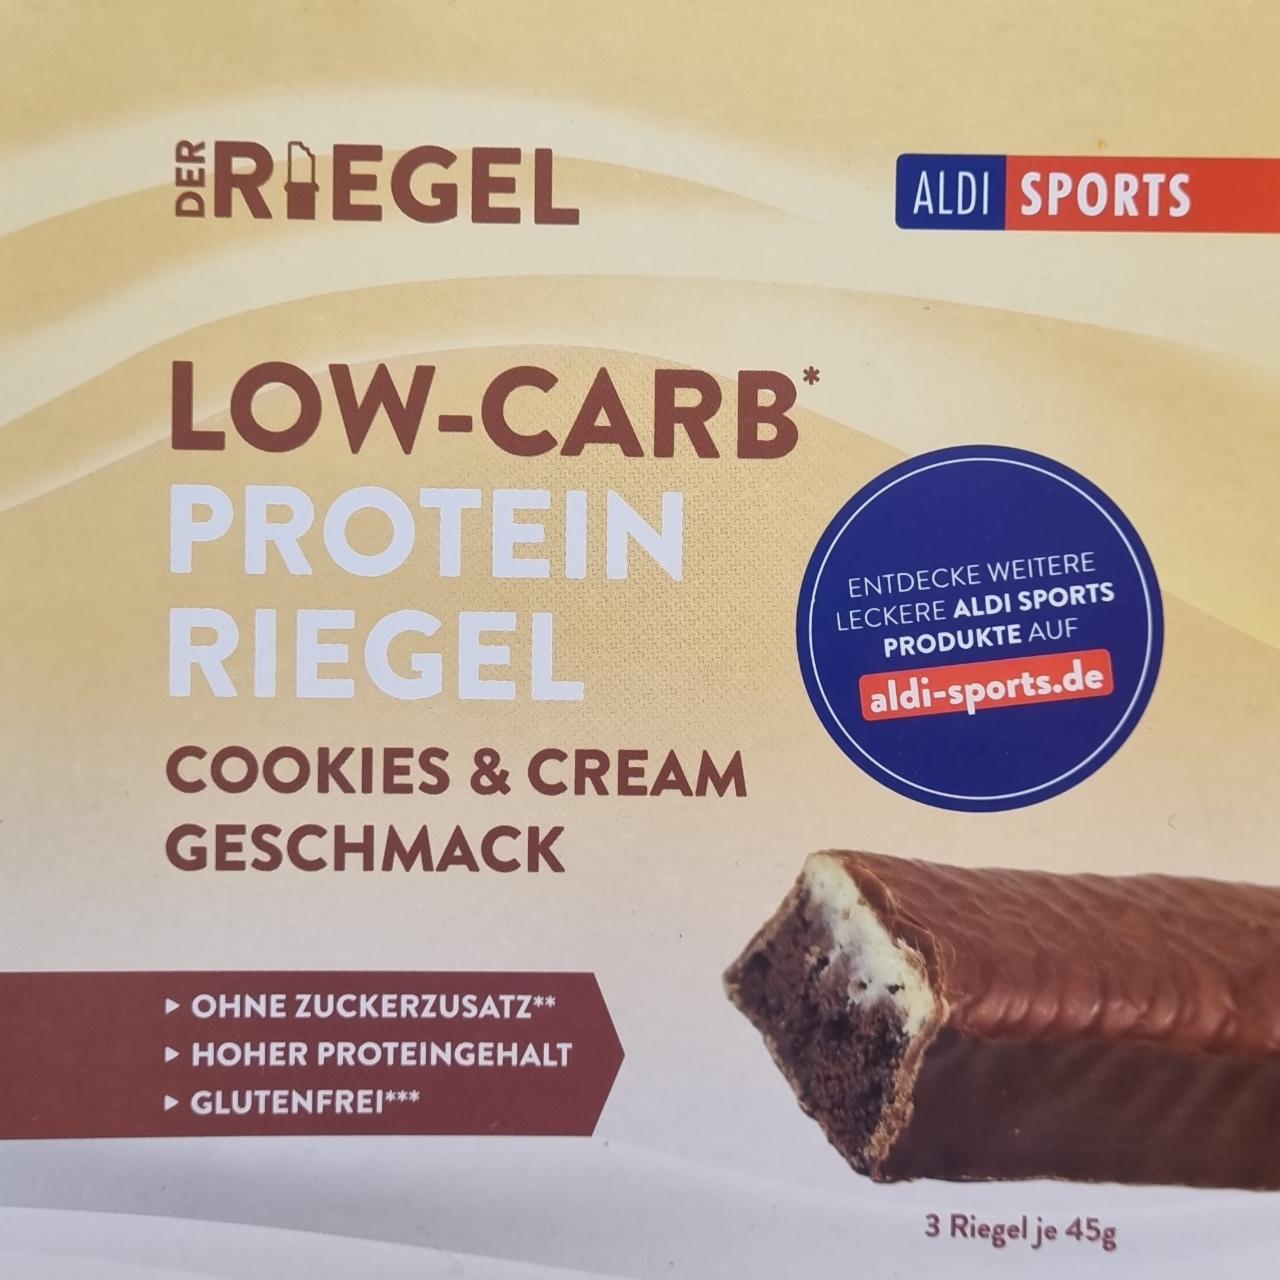 Fotografie - Low-carb Protein Riegel Cookies & Cream Aldi Sports